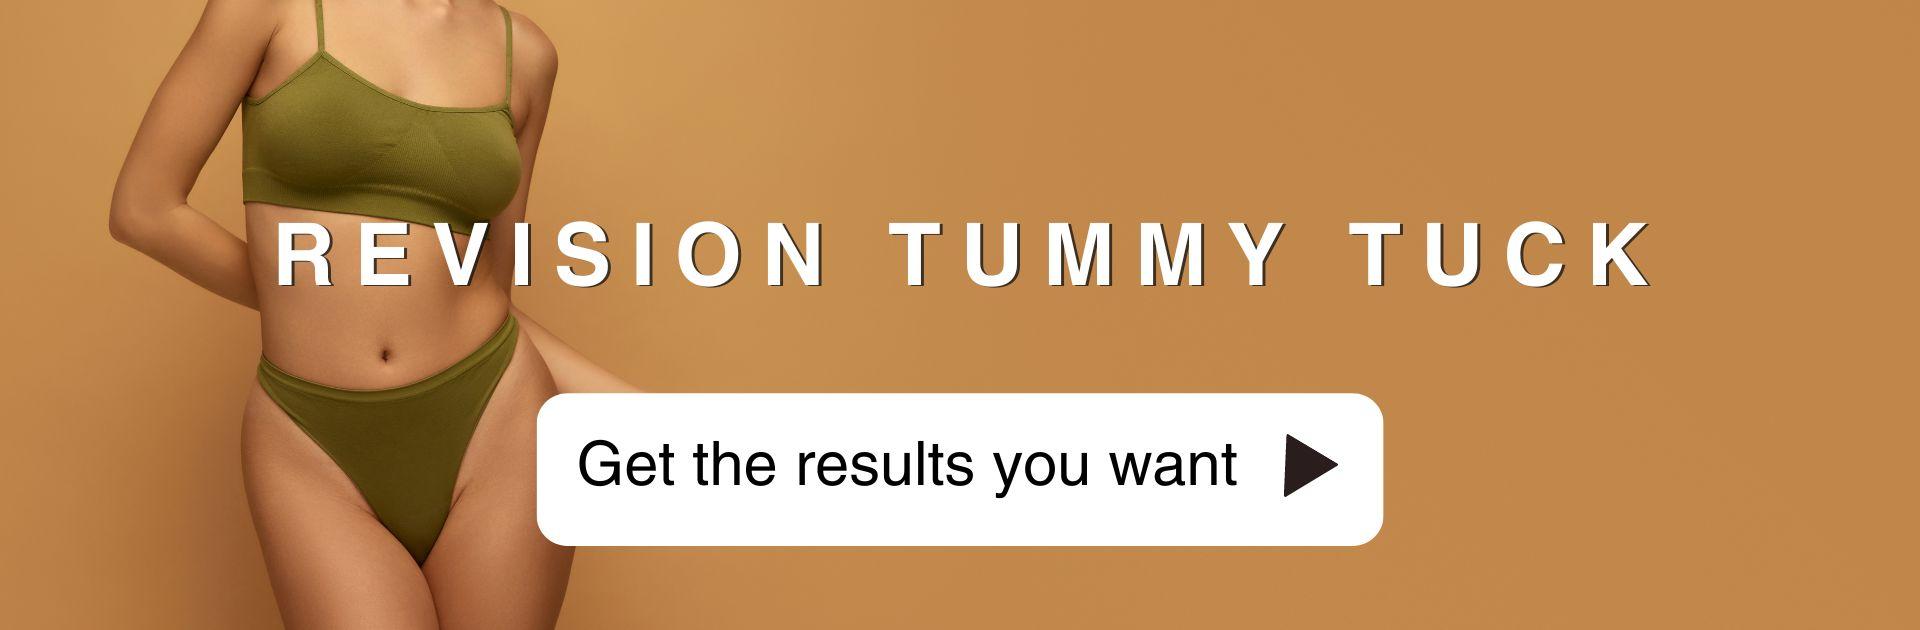 Tummy Tuck Revision - Hourglass Tummy Tuck